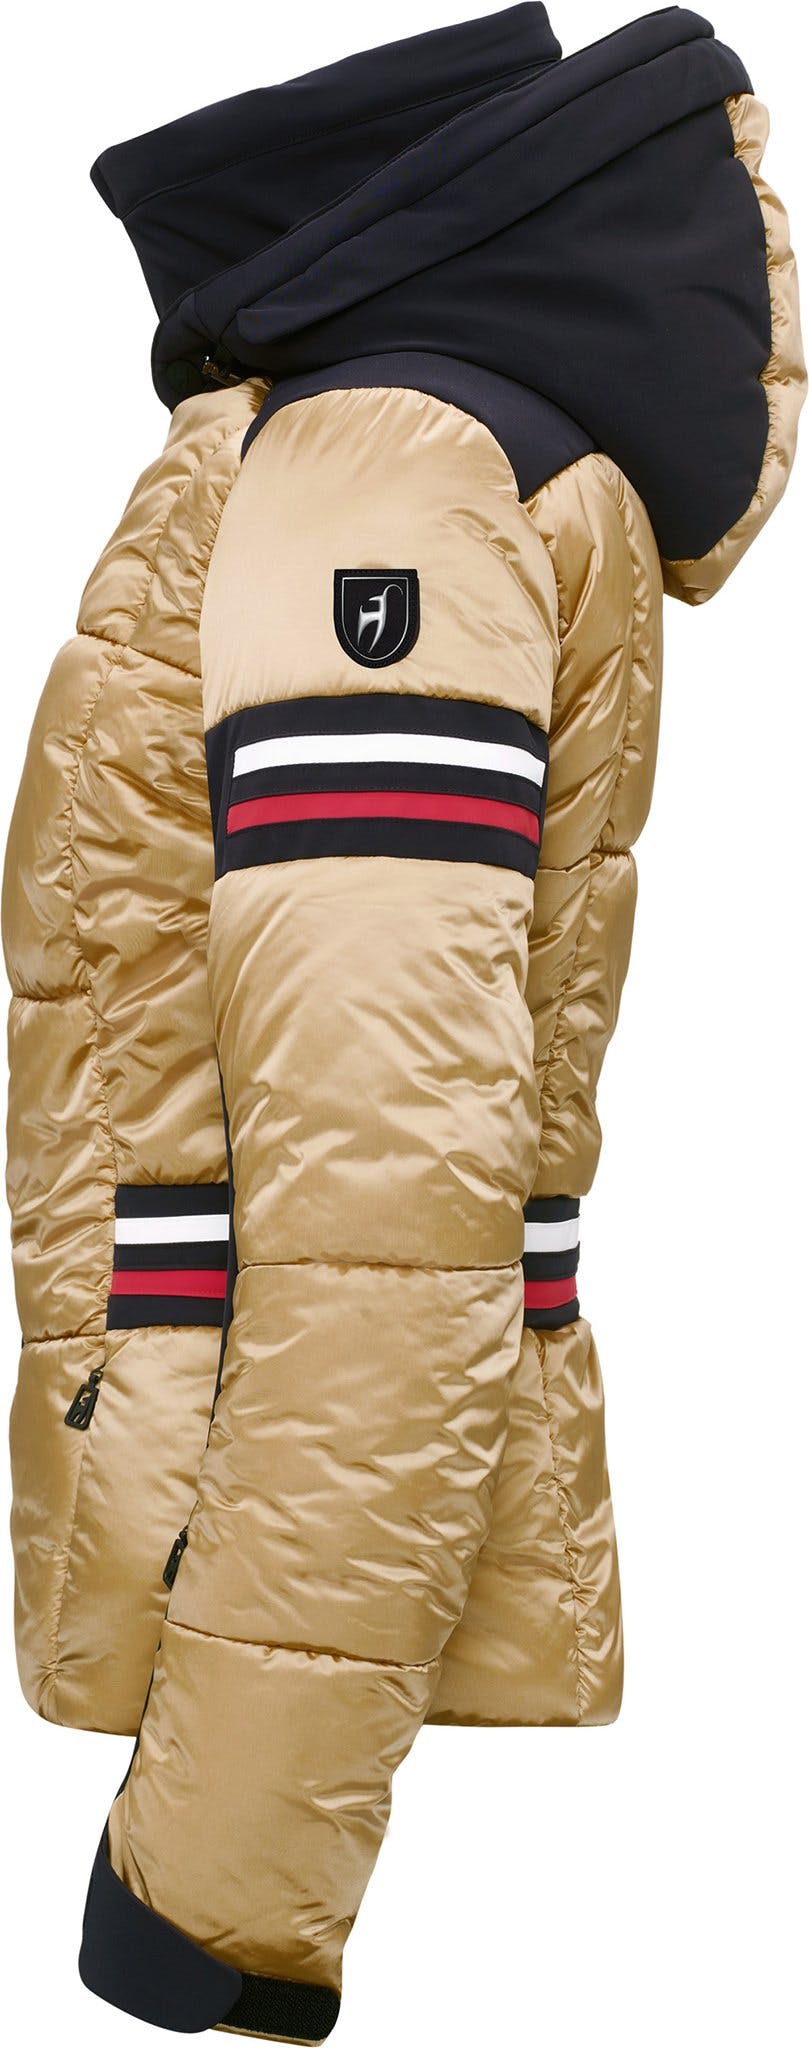 Product gallery image number 2 for product Nana Splendid Ski Jacket - Women's